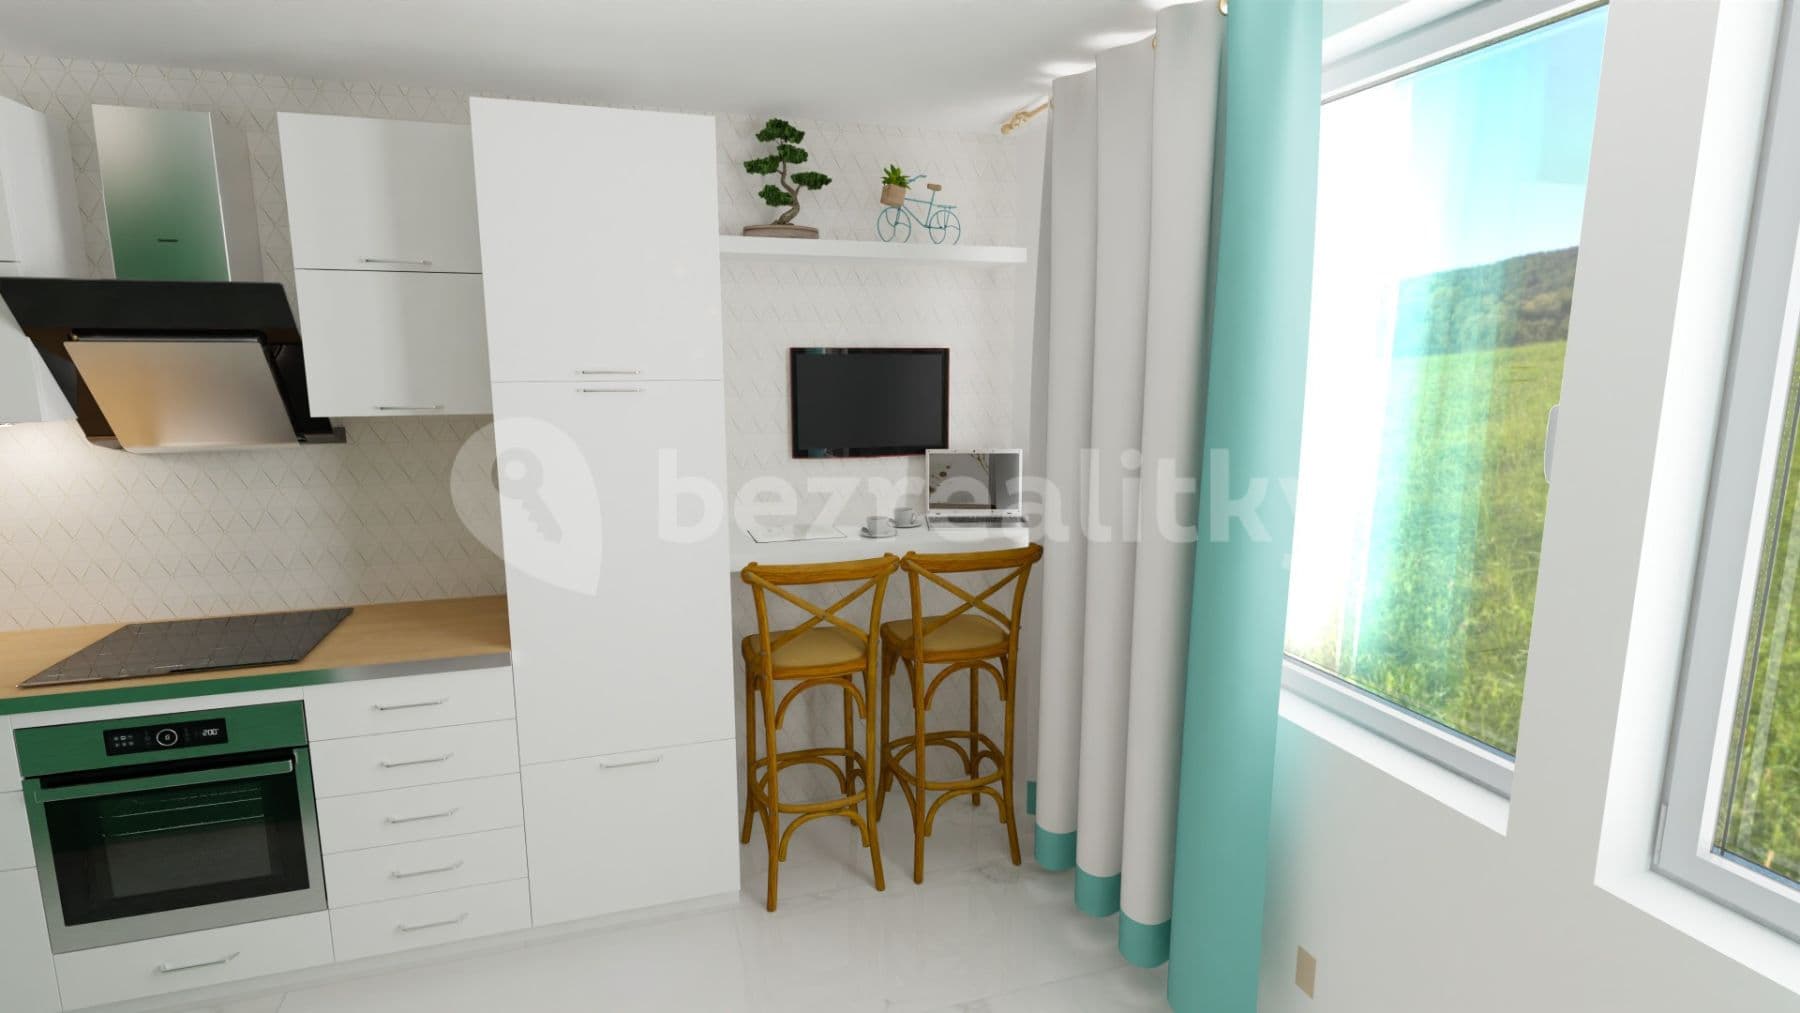 1 bedroom with open-plan kitchen flat for sale, 48 m², Levského, Prague, Prague